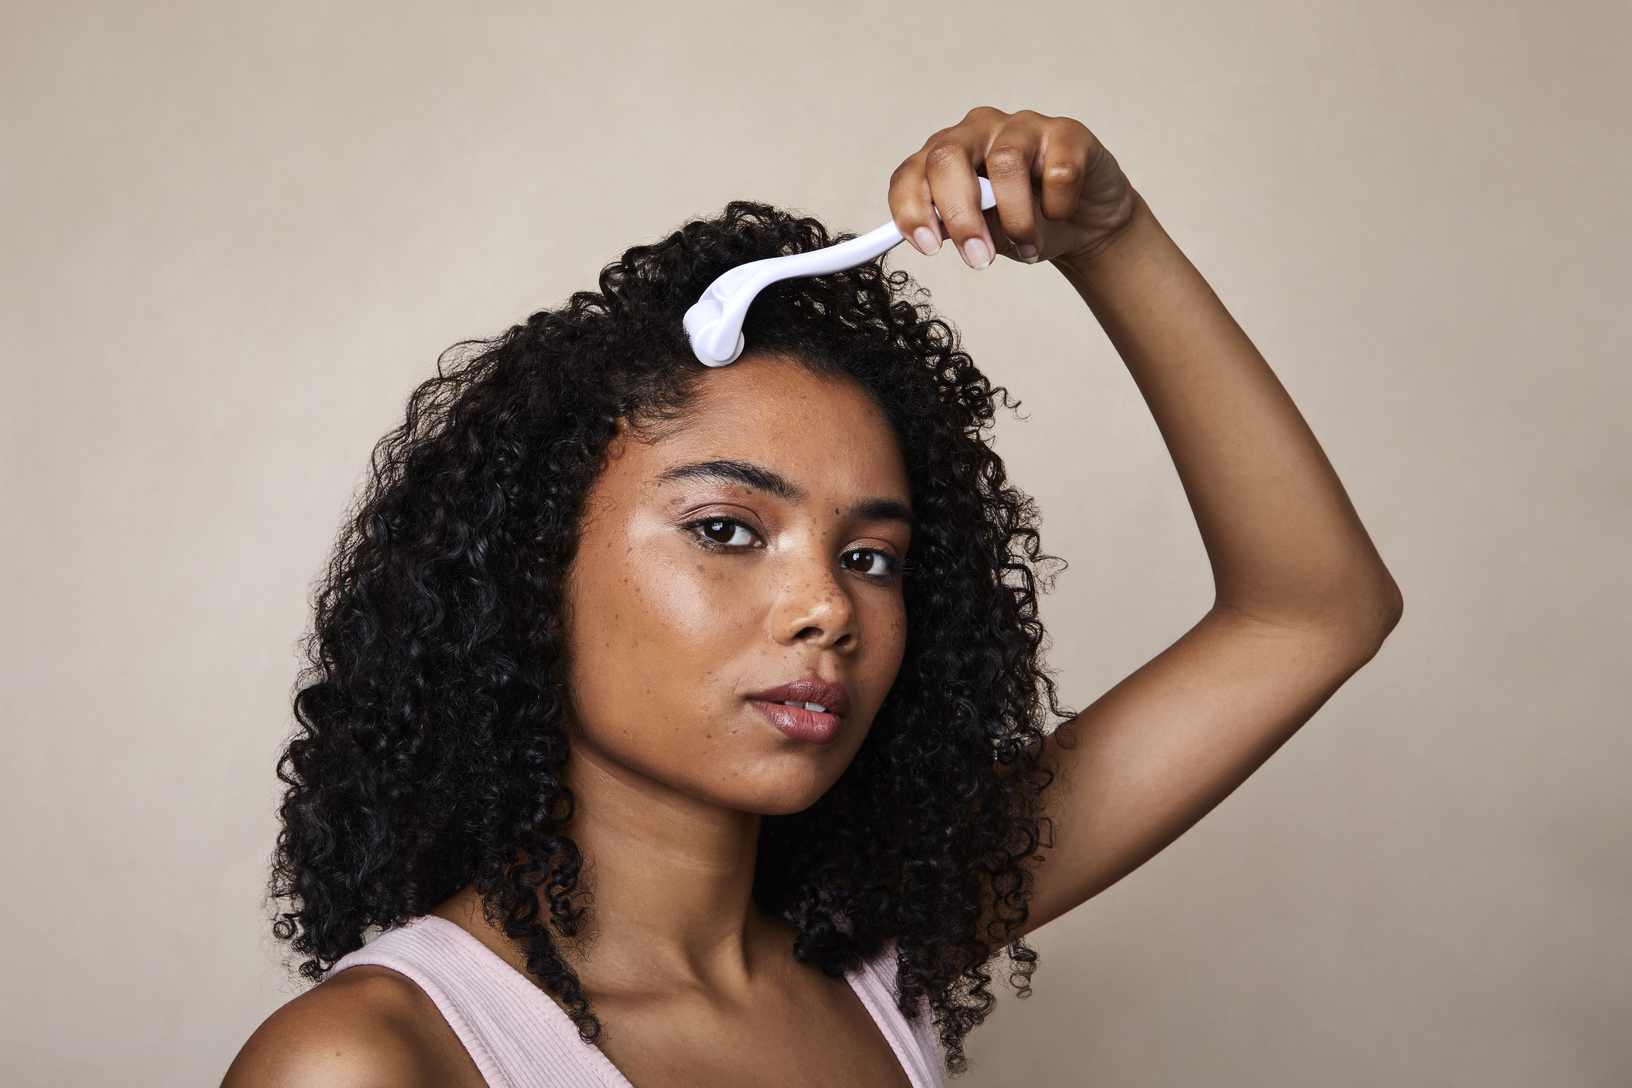 What Causes Postpartum Hair Loss?